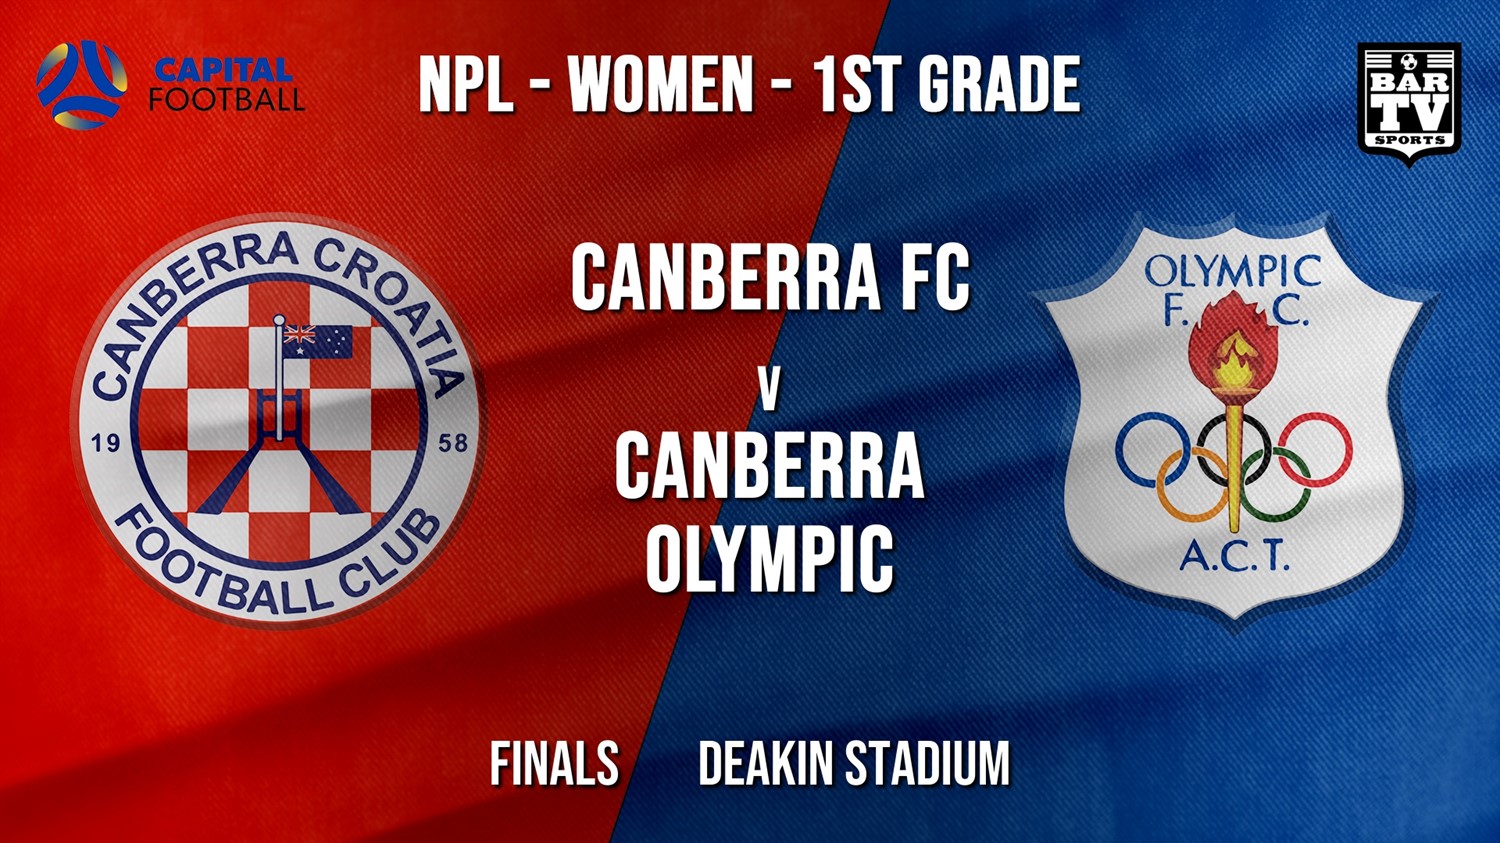 NPL Women - 1st Grade - Capital Football Finals Finals - Canberra FC (women) v Canberra Olympic FC (women) Slate Image